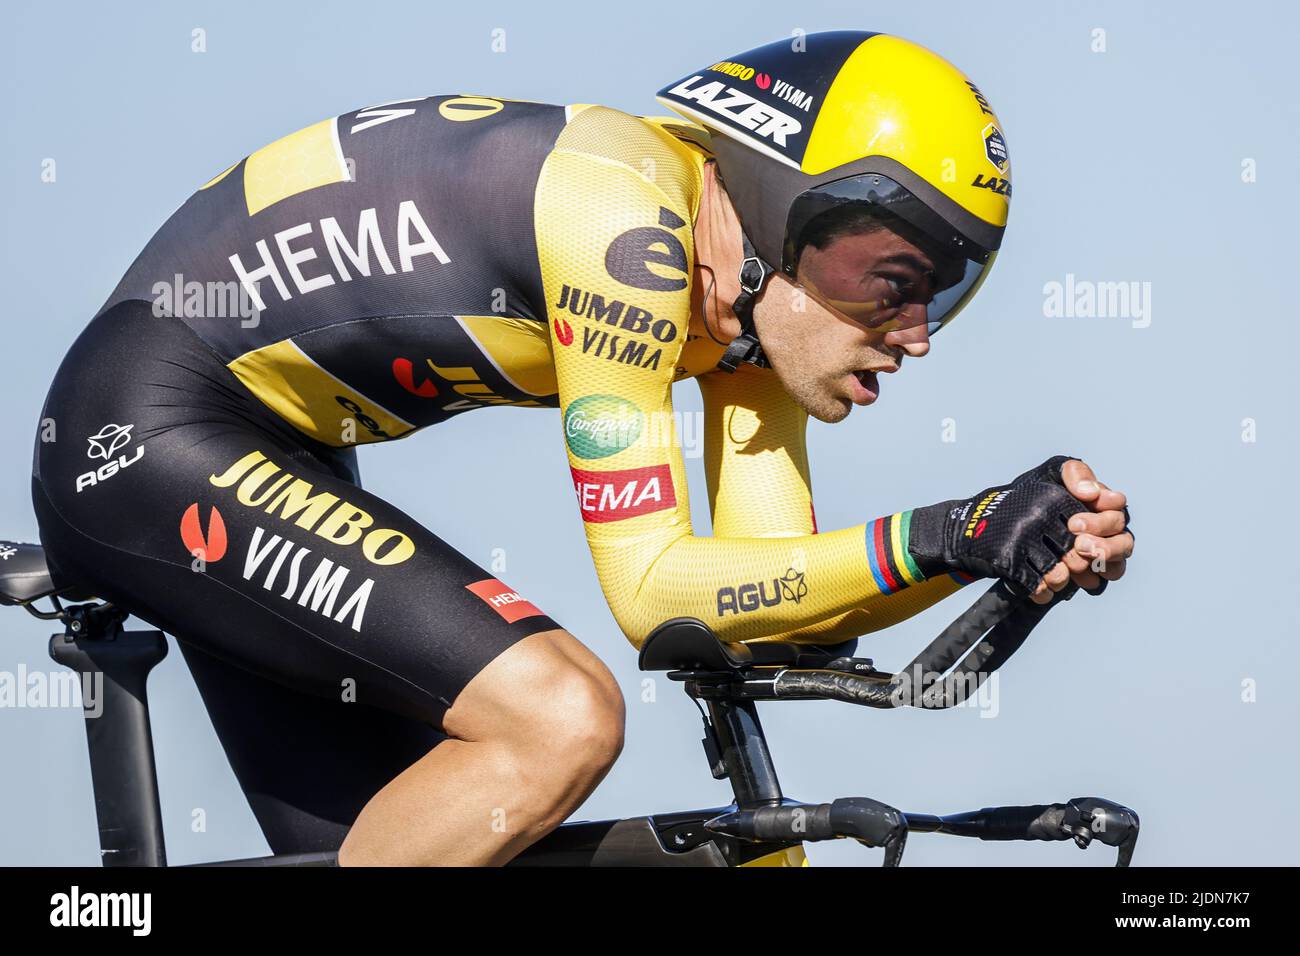 2022-06-22 18:01:23 EMMEN - ciclista Tom Dumoulin durante i campionati nazionali olandesi di prova di tempo a Drenthe. ANP BAS CZERWINSKI olanda OUT - belgio OUT Foto Stock